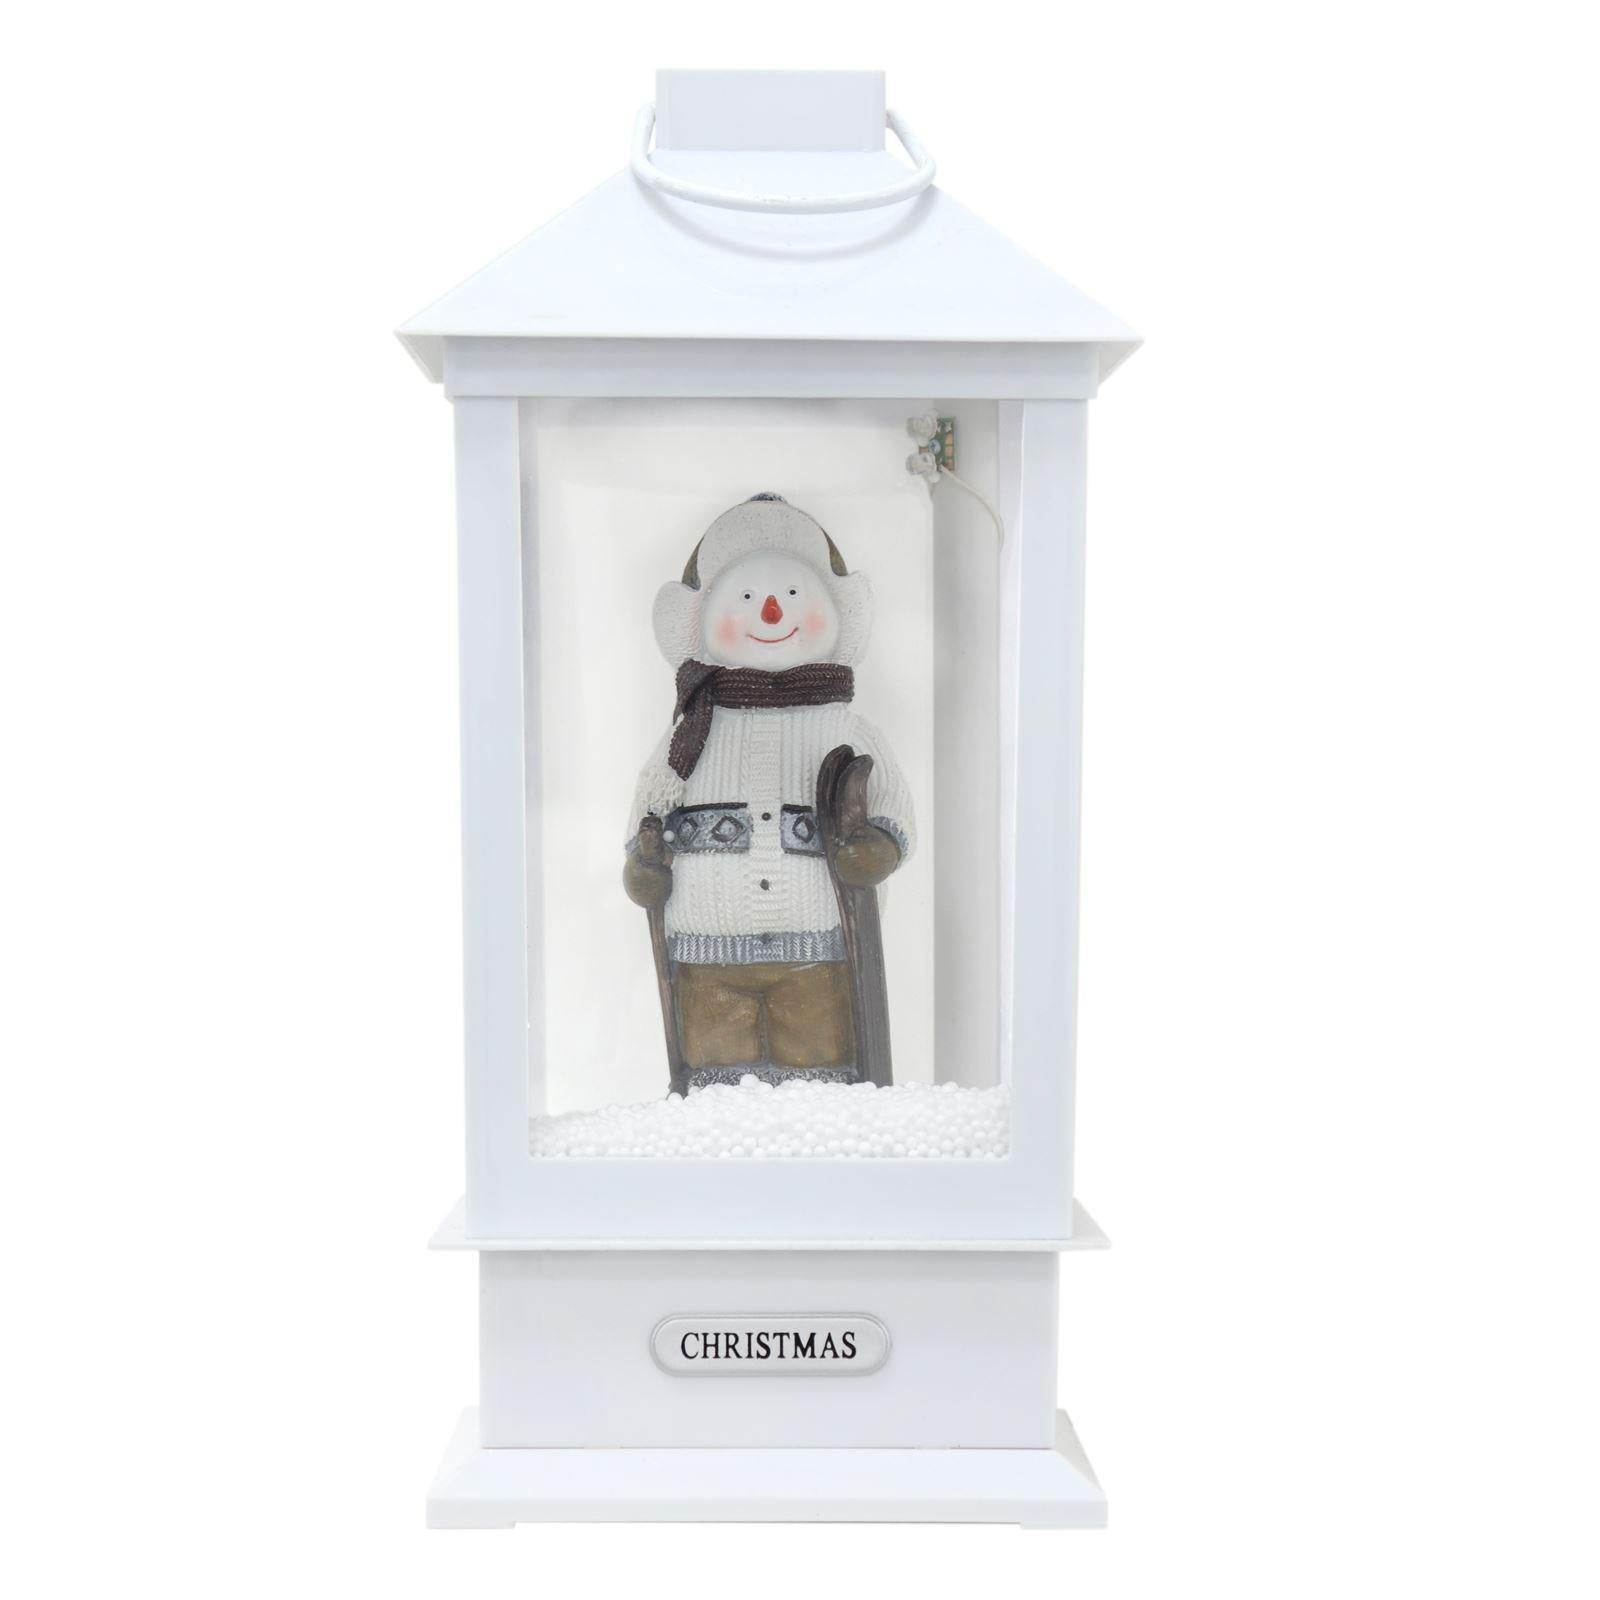 Mr Crimbo 13" Christmas Lantern Light Up Snowing Musical - MrCrimbo.co.uk -XS5717 - Snowman -christmas decorations